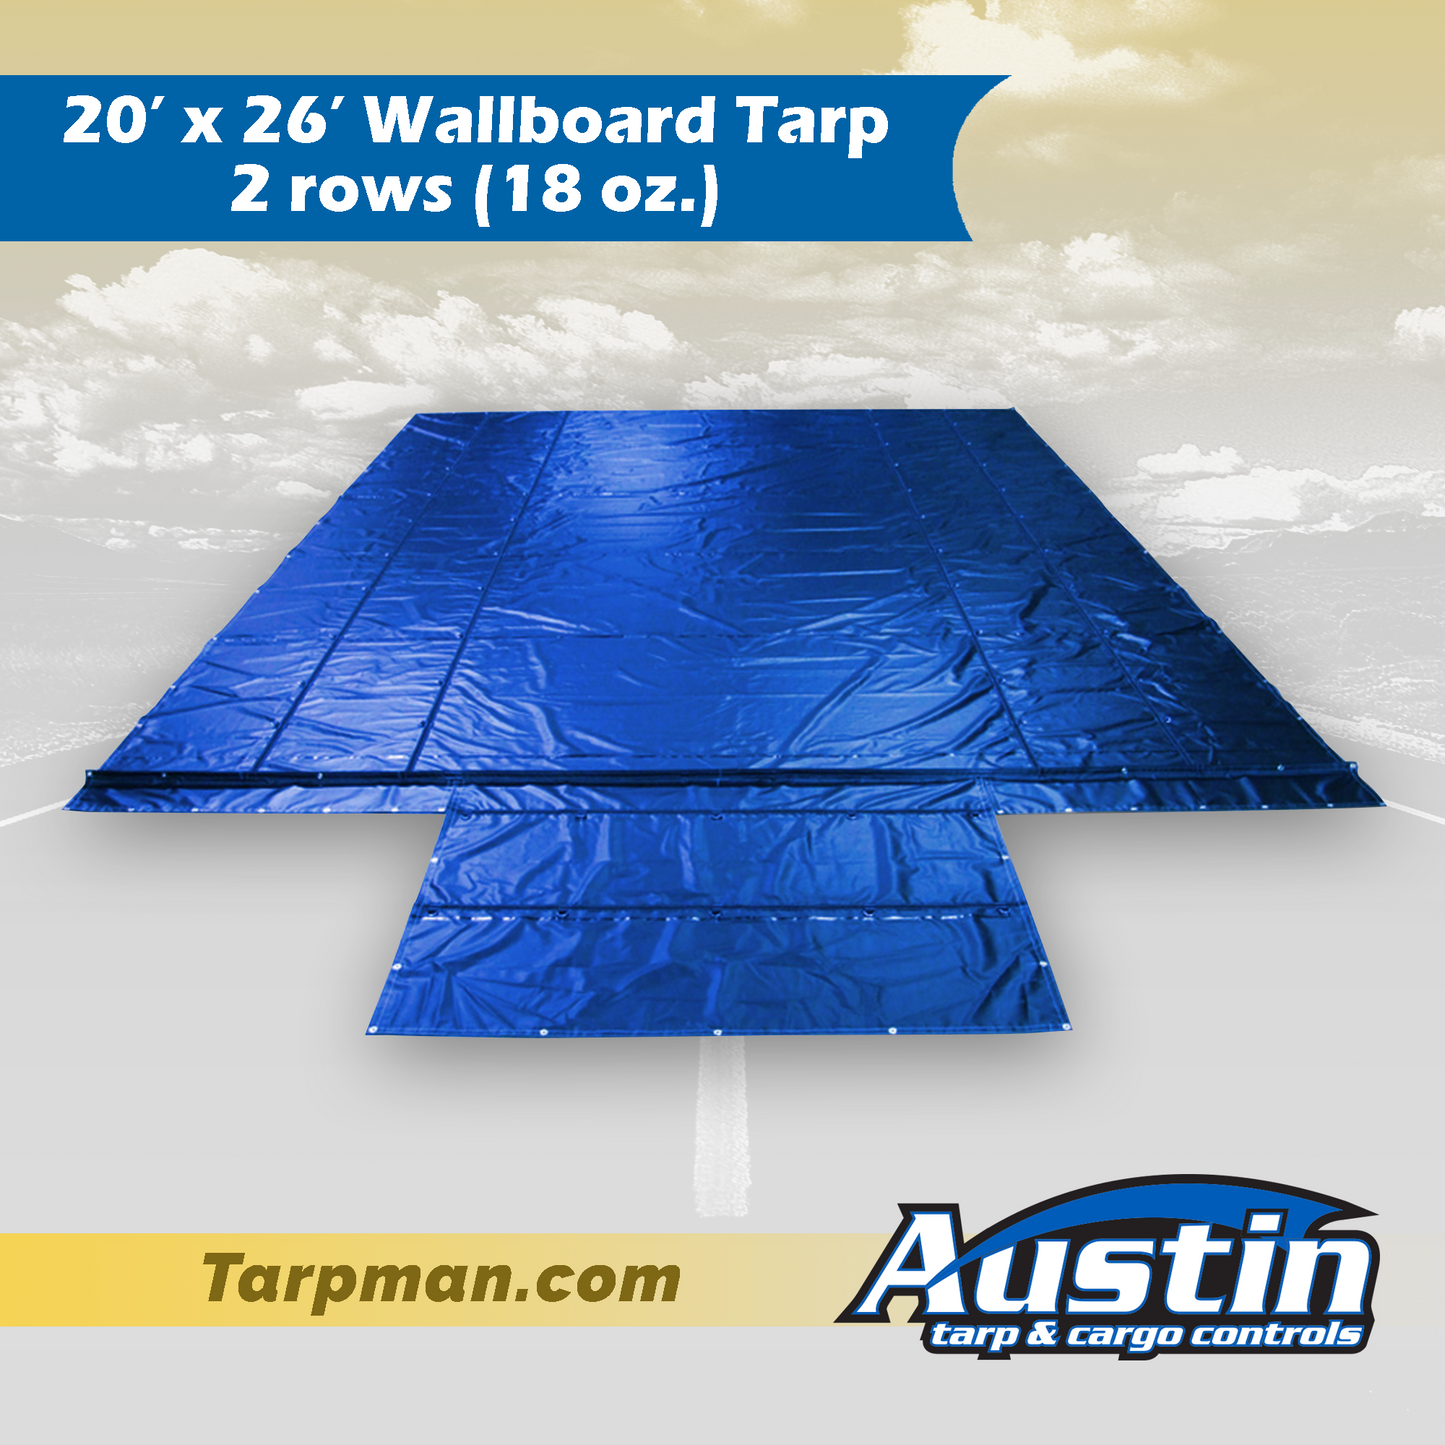 20' x 26' Wallboard Tarp - 2 rows (18 oz.) Tarpman.com | Austin Tarp & Cargo Controls